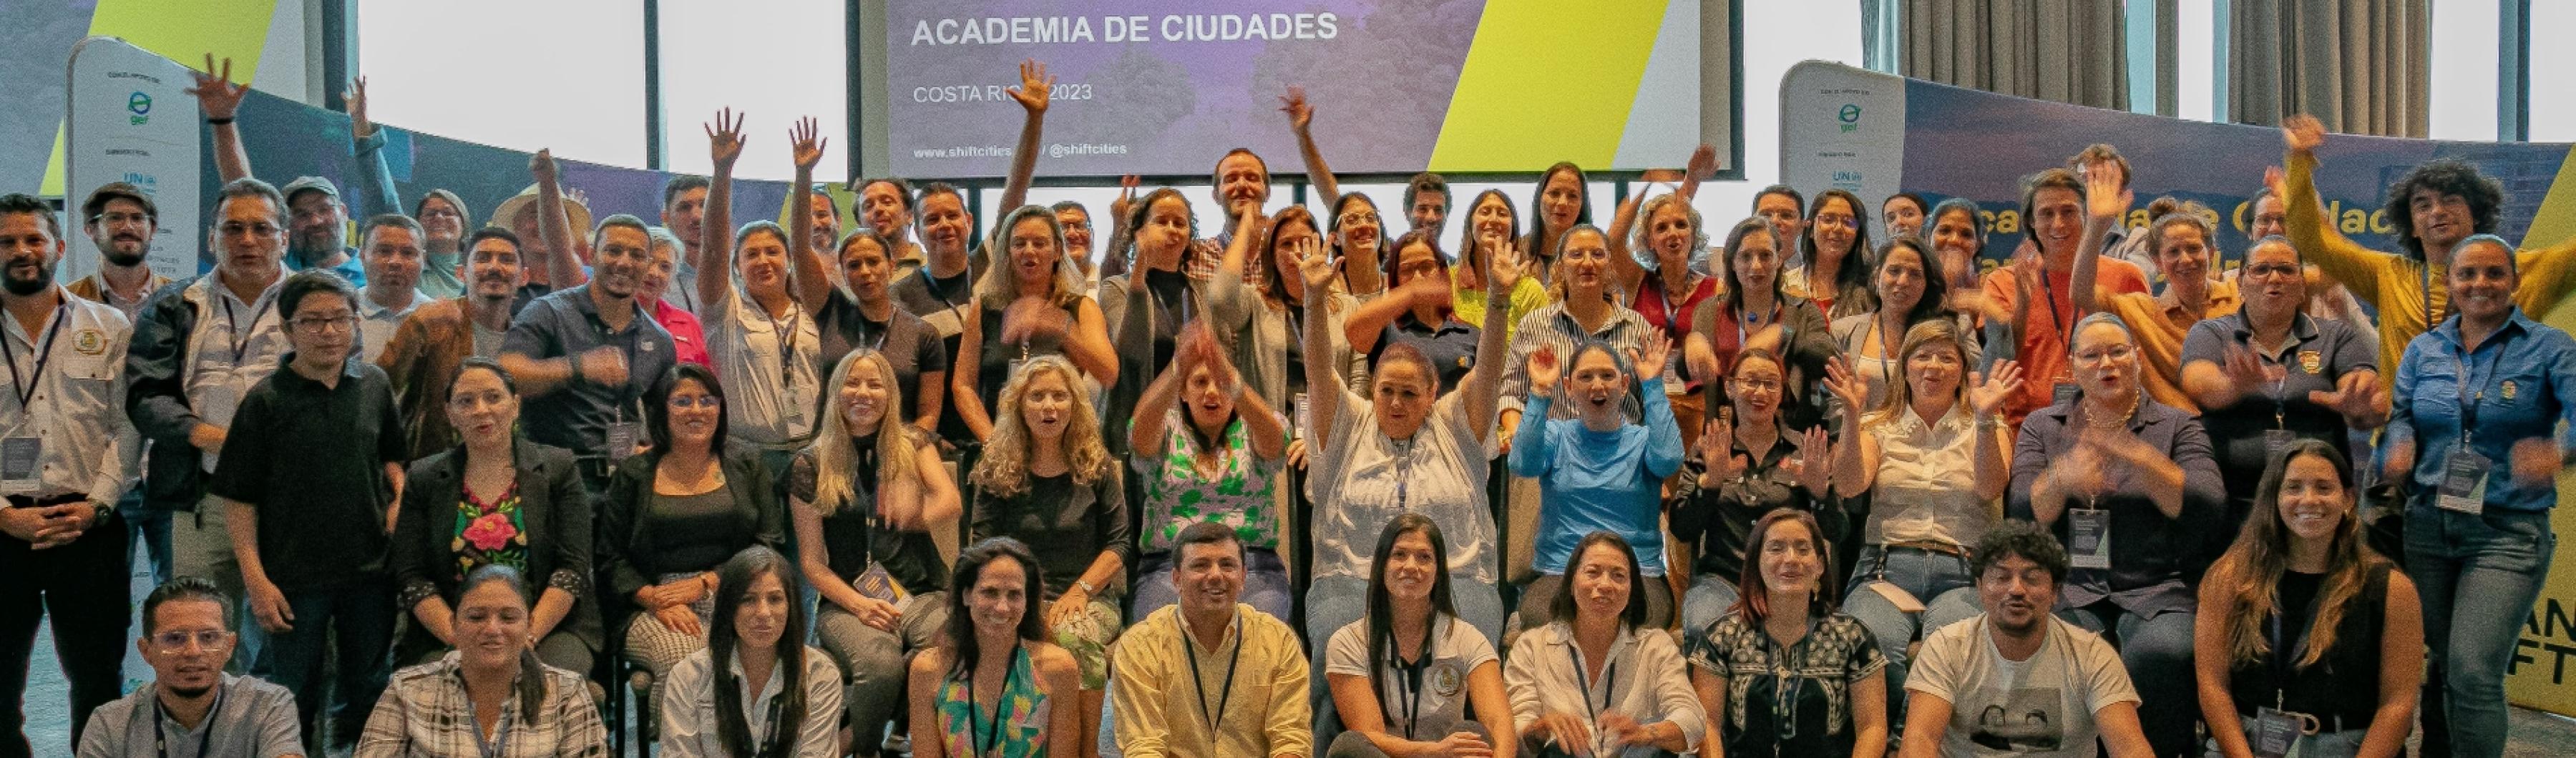 UrbanShift Costa Rica City Academy participants and organizers